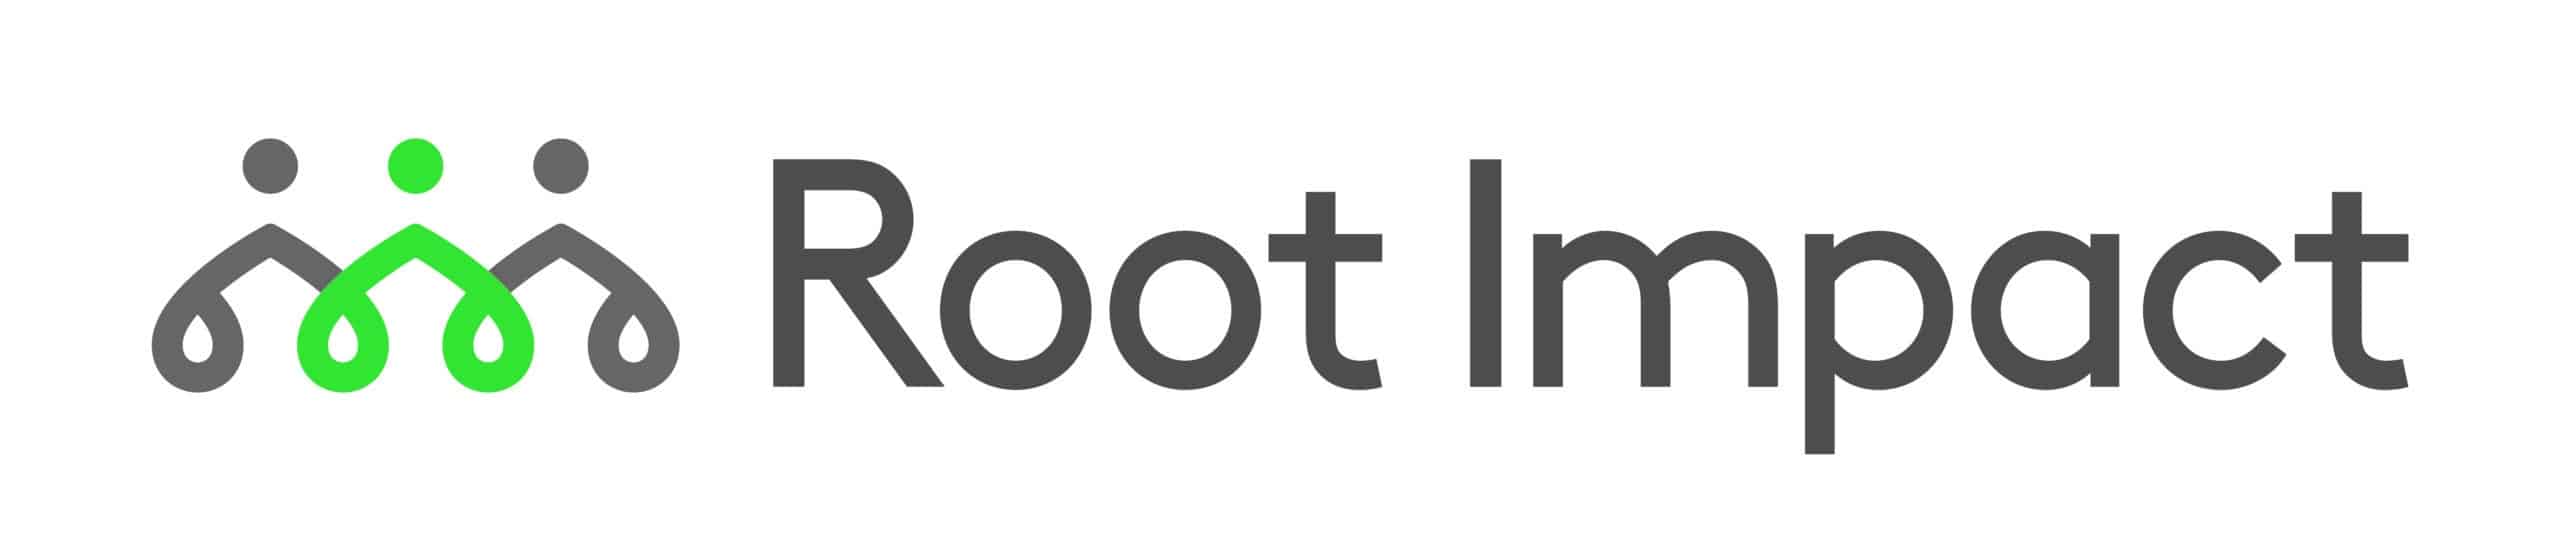 Root Impact